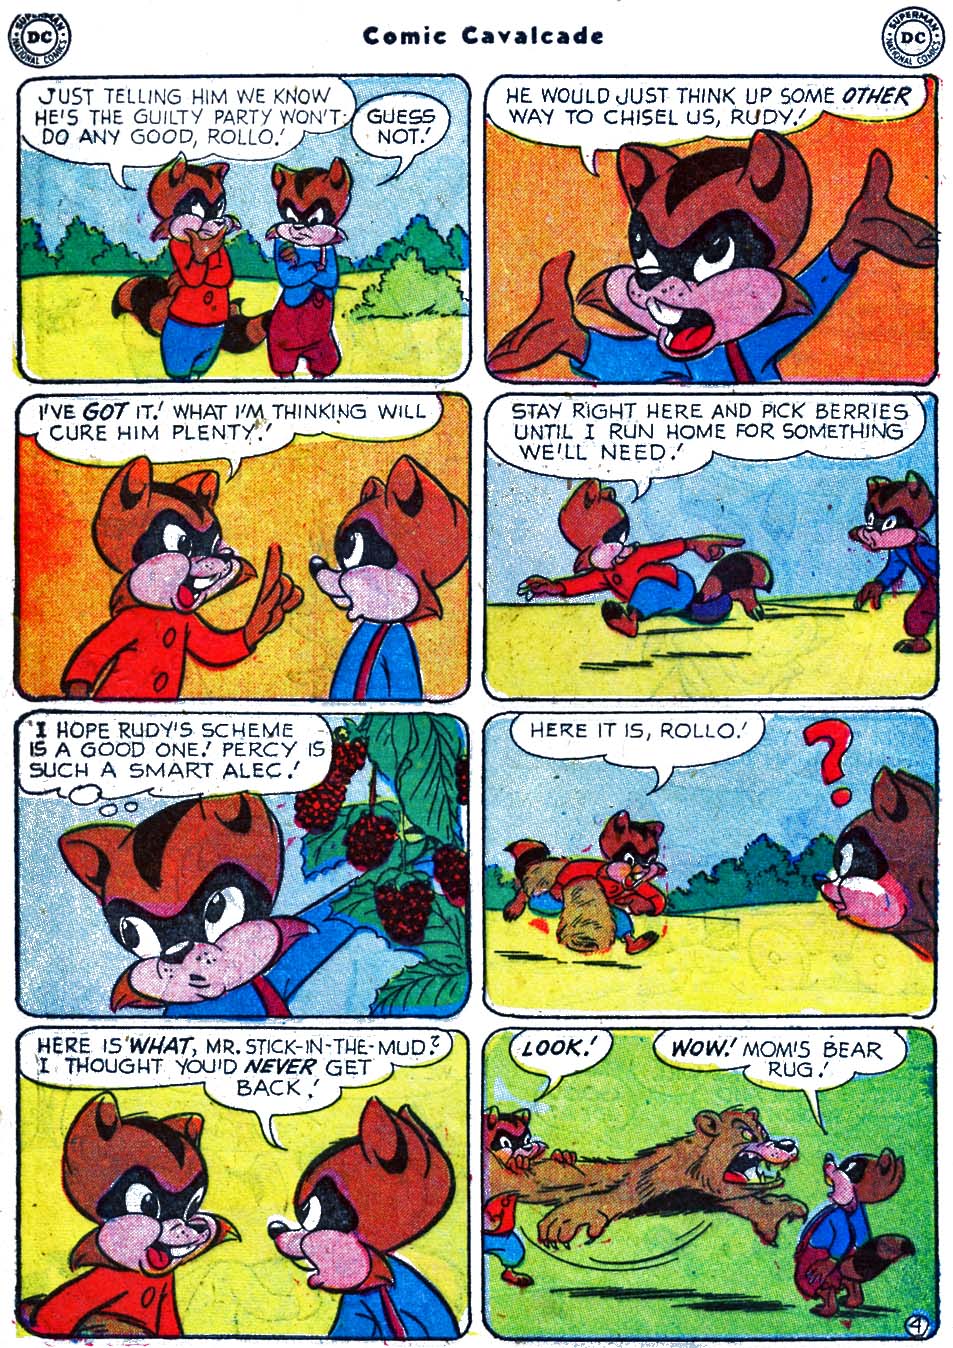 Comic Cavalcade issue 47 - Page 16